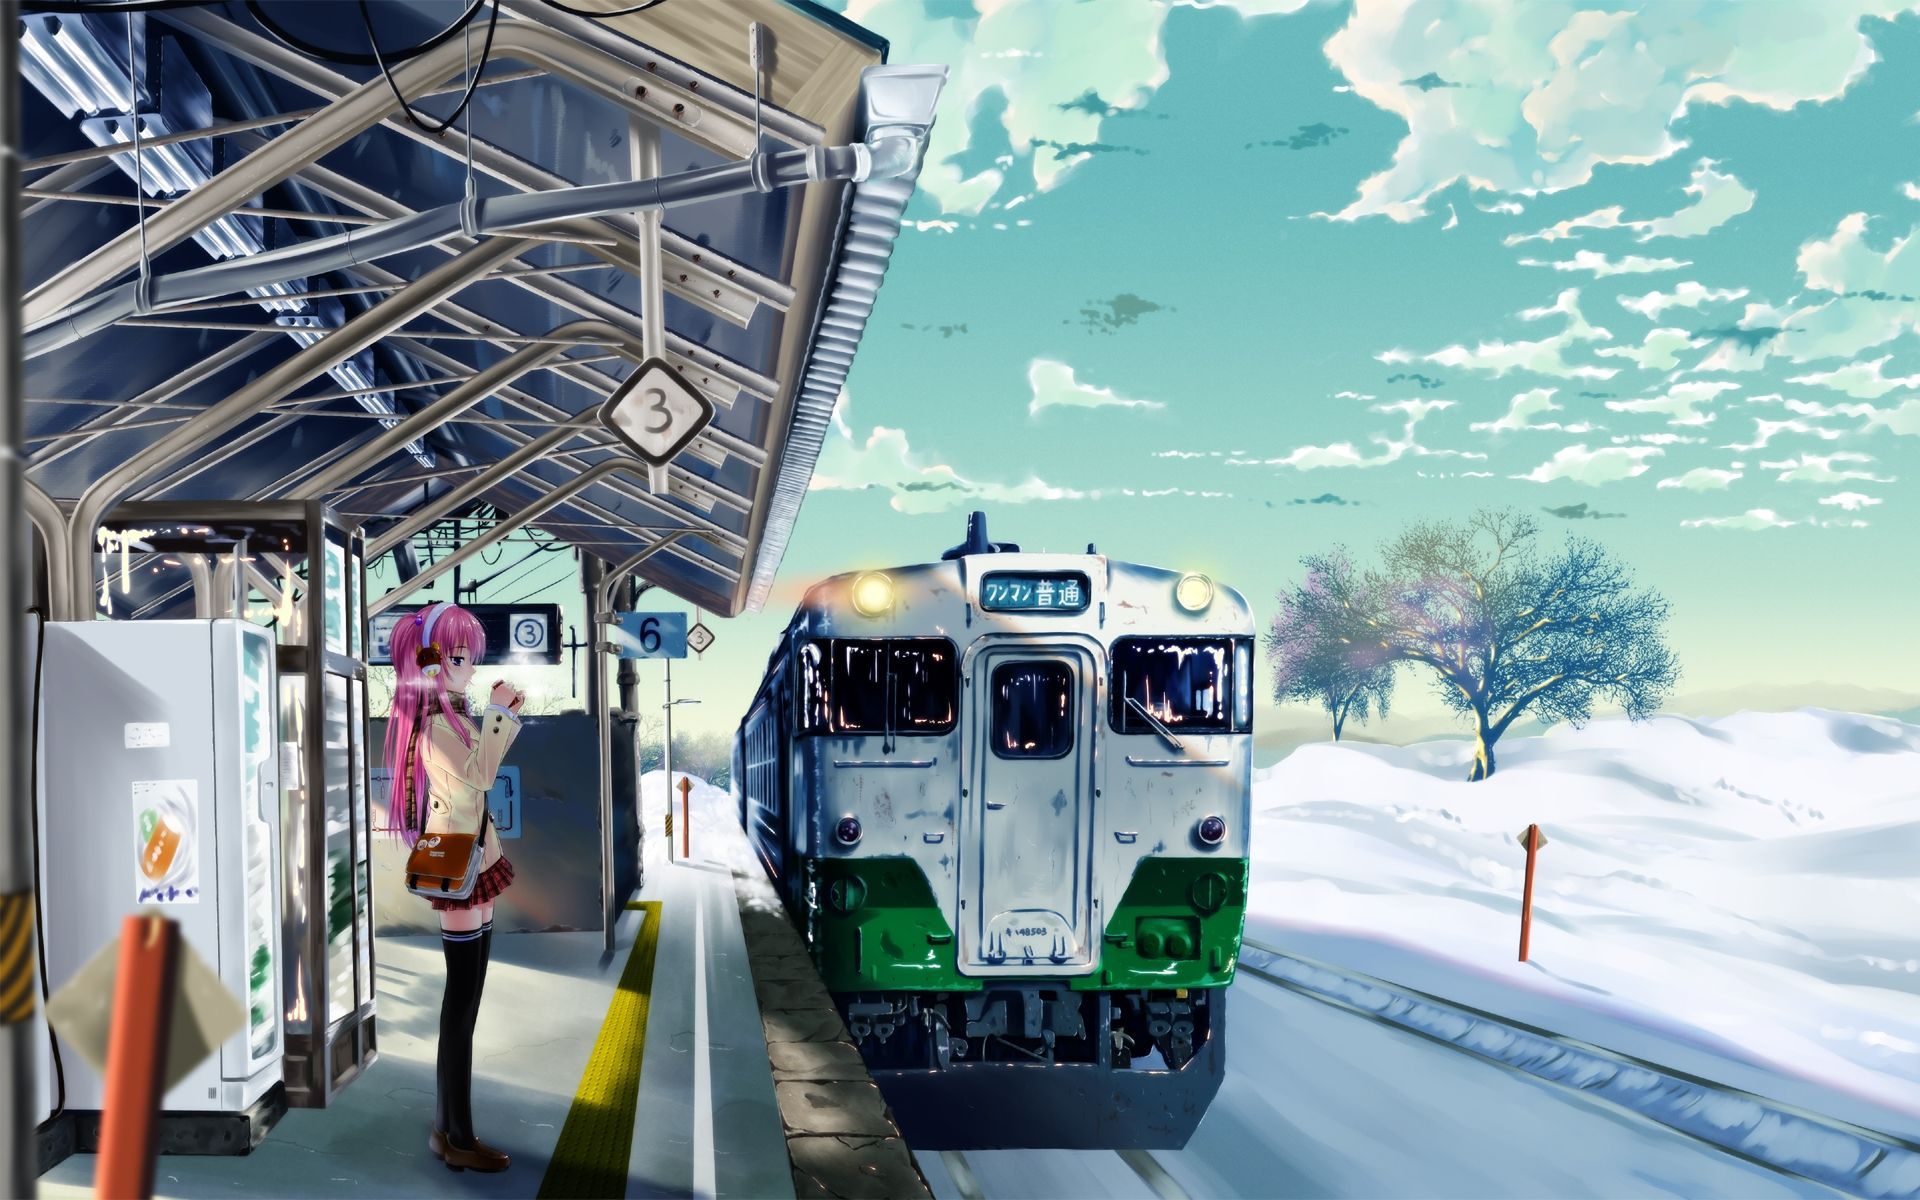 AI Art Generator: Train station, rain, night, anime